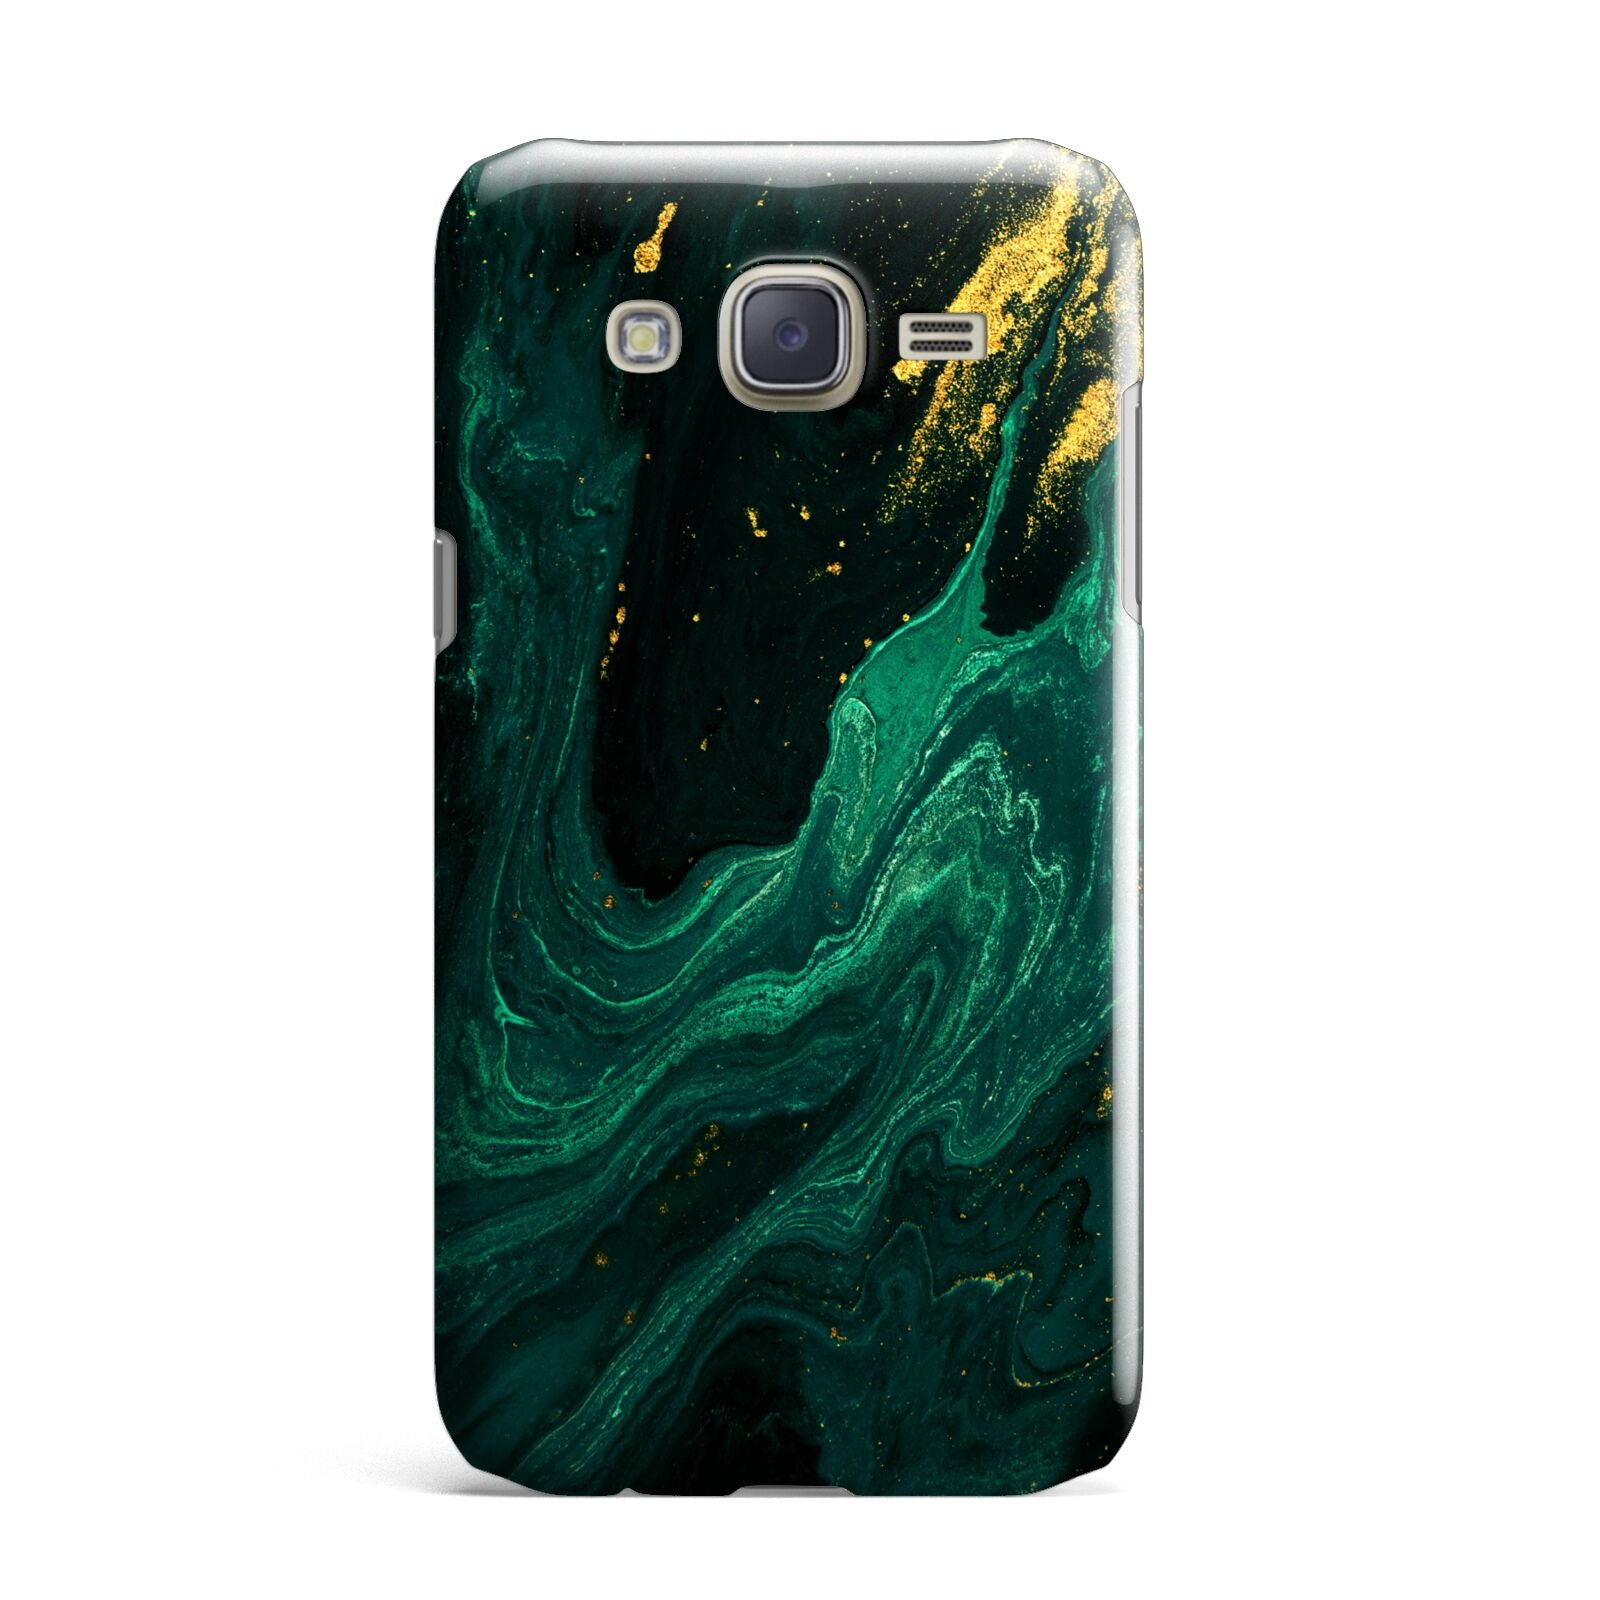 Emerald Green Samsung Galaxy J7 Case